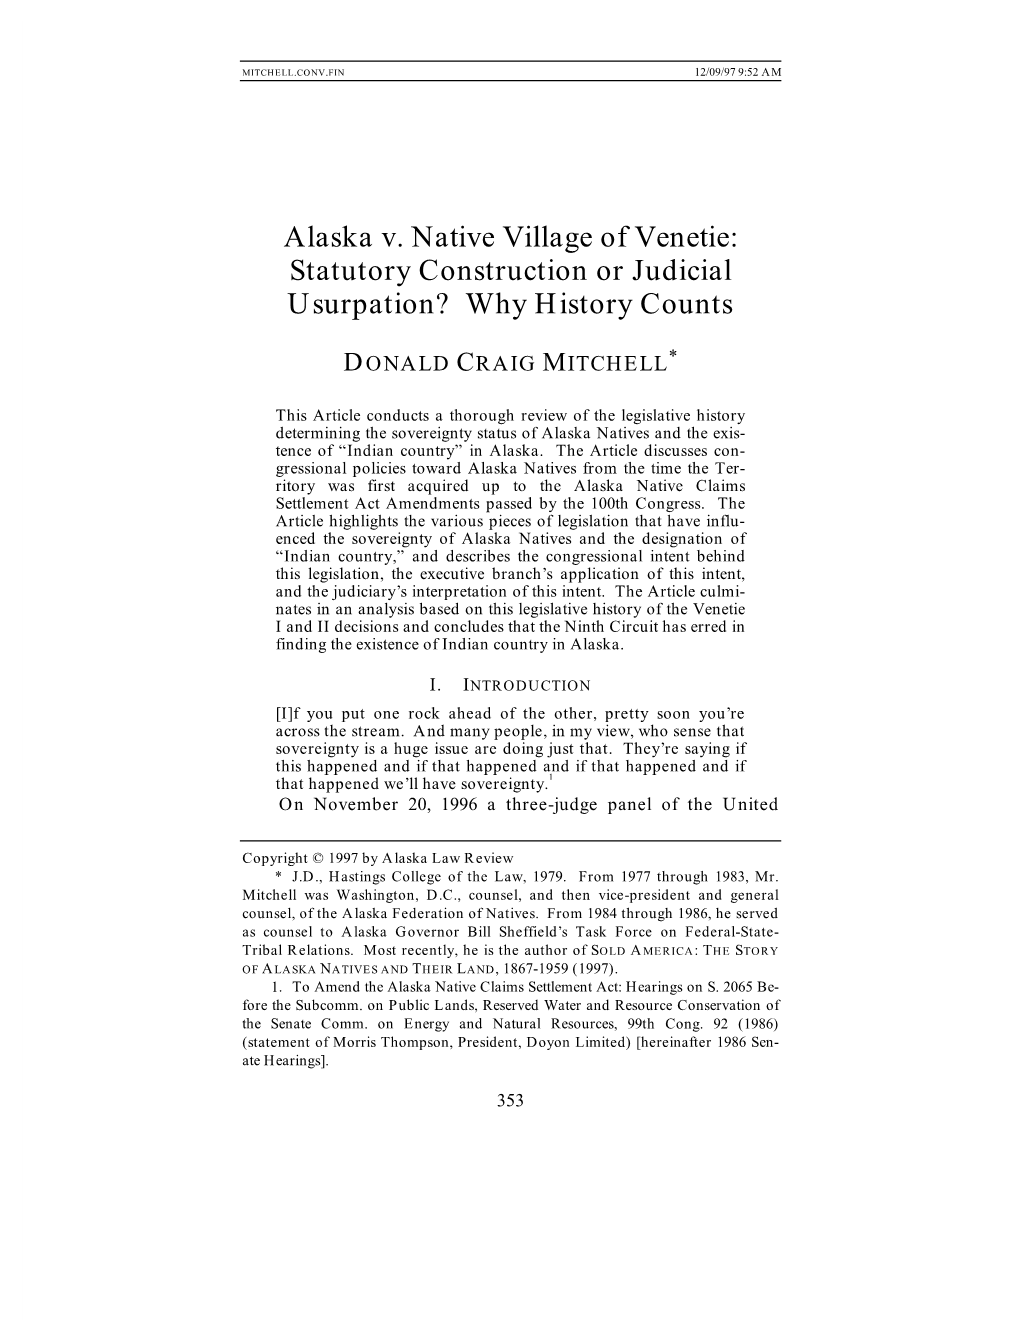 Alaska V. Native Village of Venetie: Statutory Construction Or Judicial Usurpation? Why History Counts